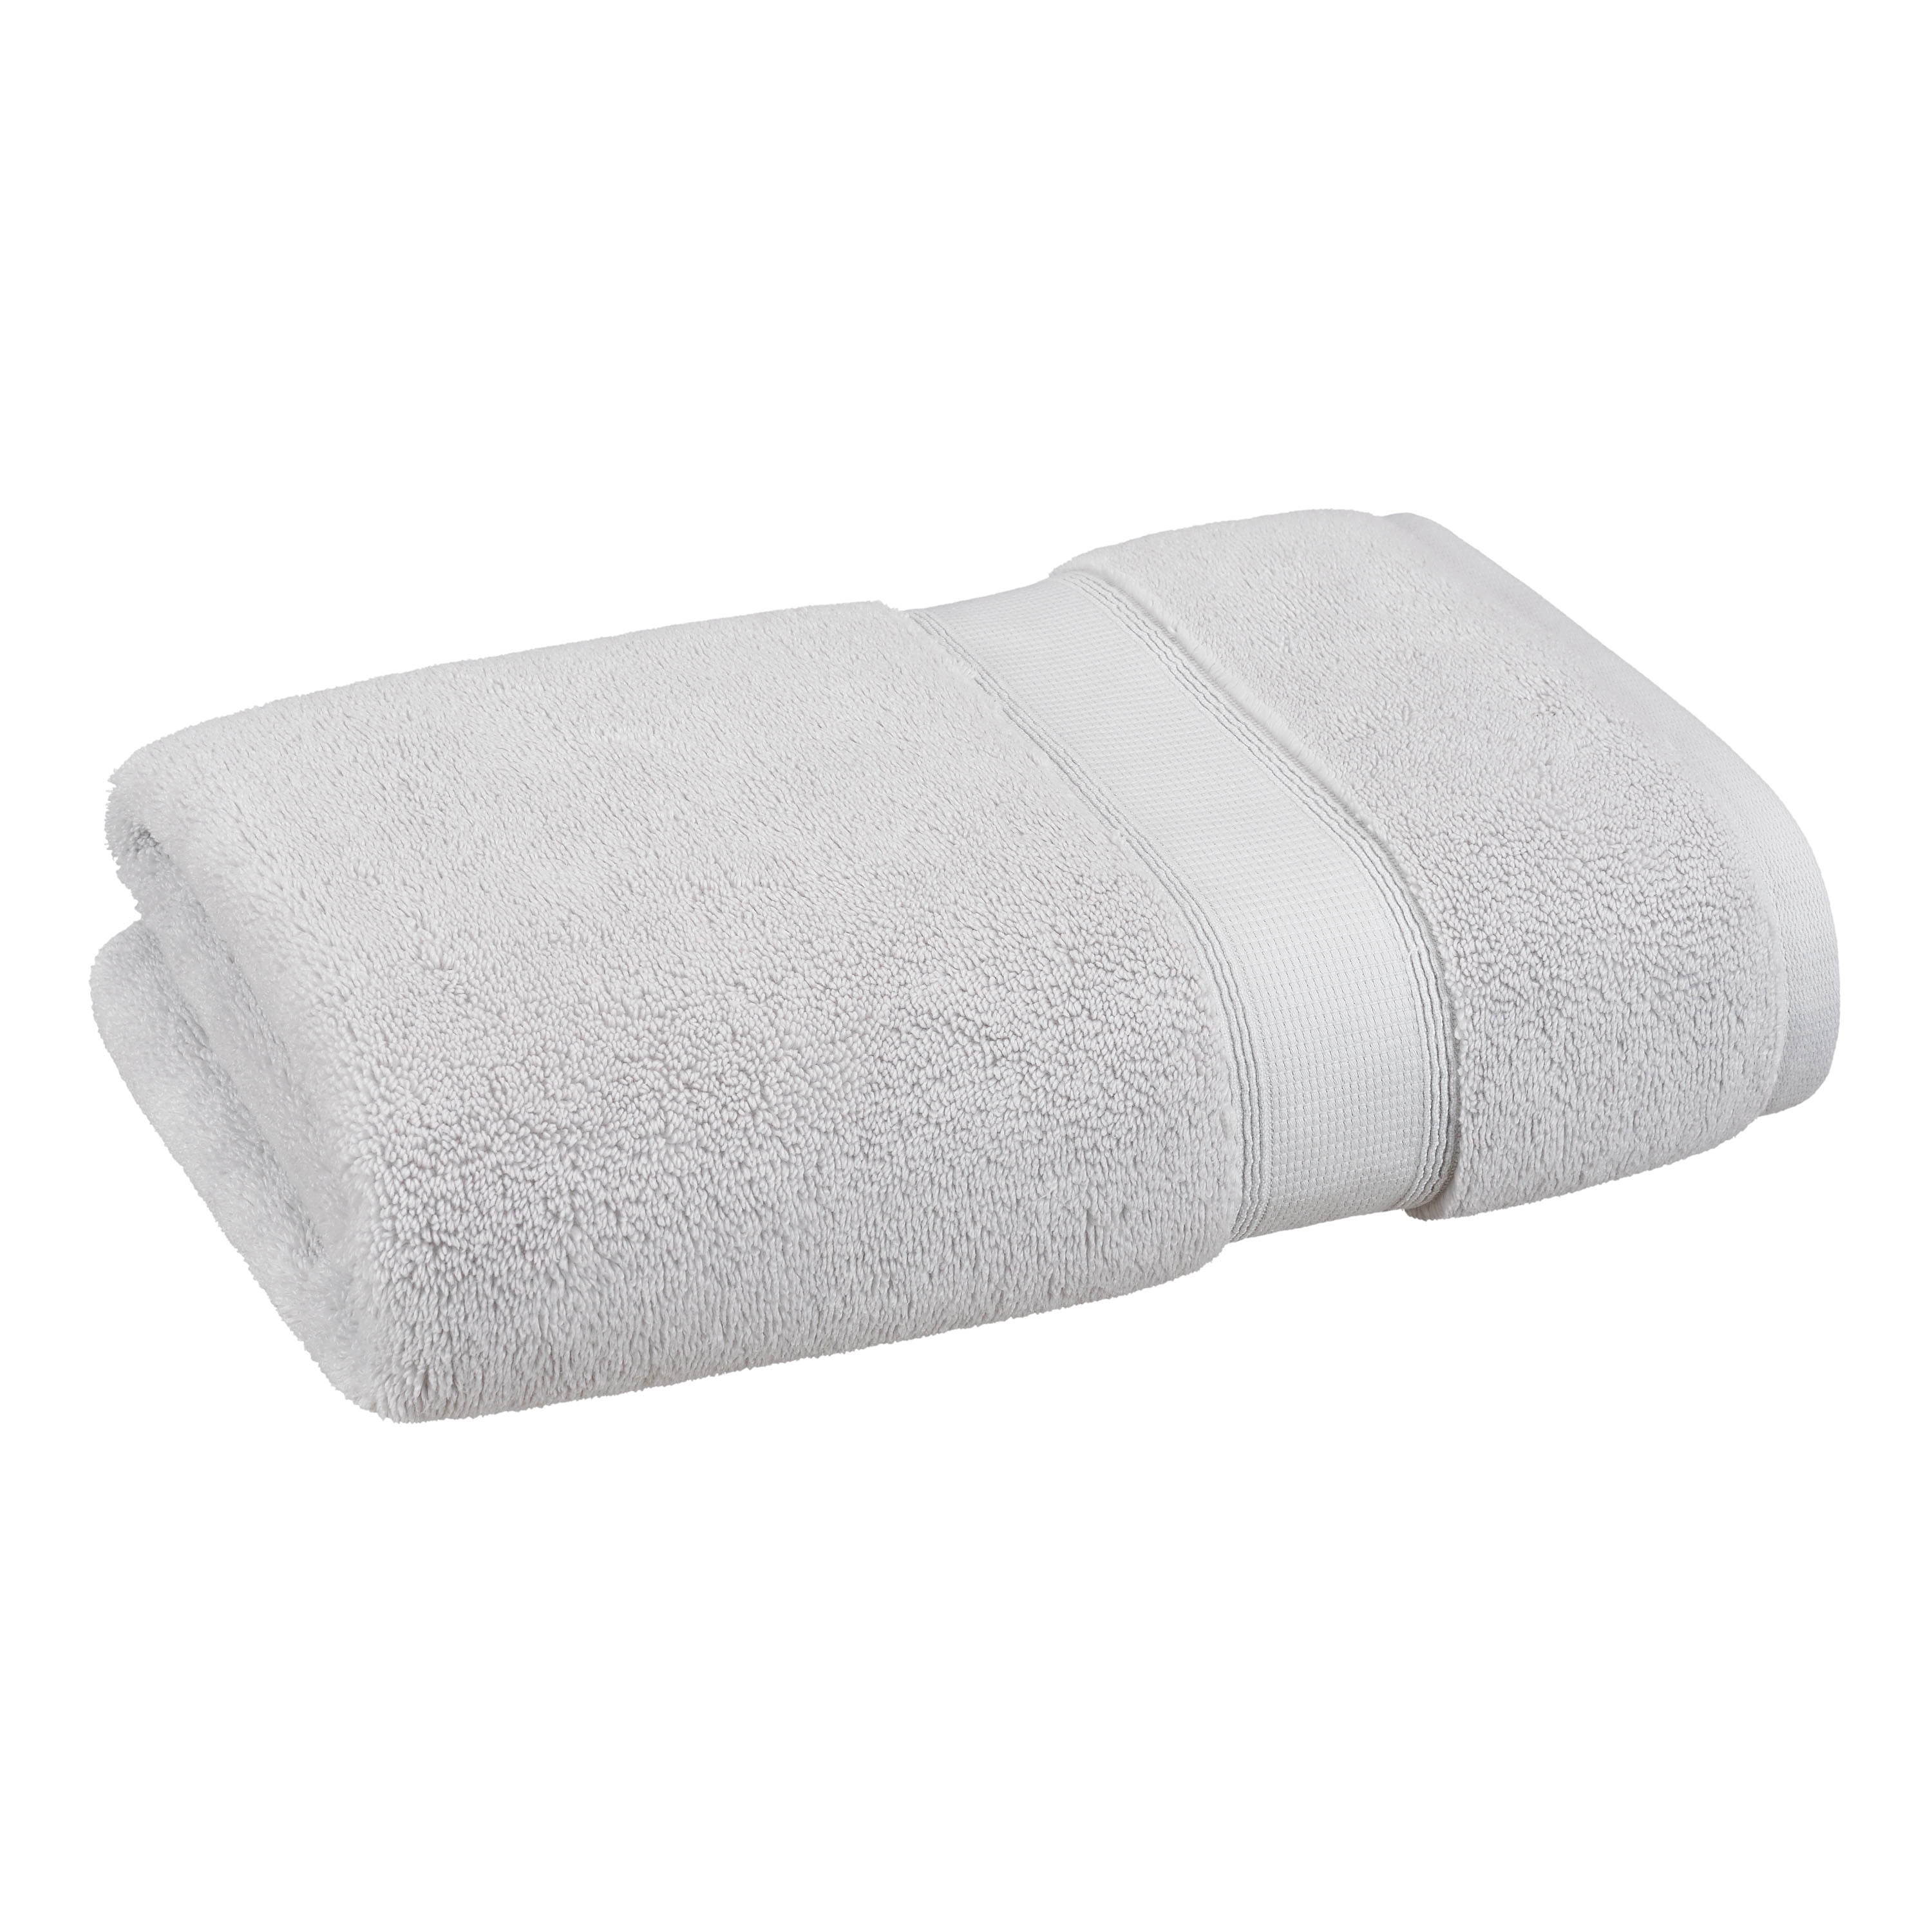 Super Soft Towel Bathroom Set, Egyptian Cotton 800g Bath Towel 80 * 160  Large Size More Super Absorbent Portable Travel Bath Towel for Home Hotel  (Color : Lv, Size : 80x160cm): Hand Towels